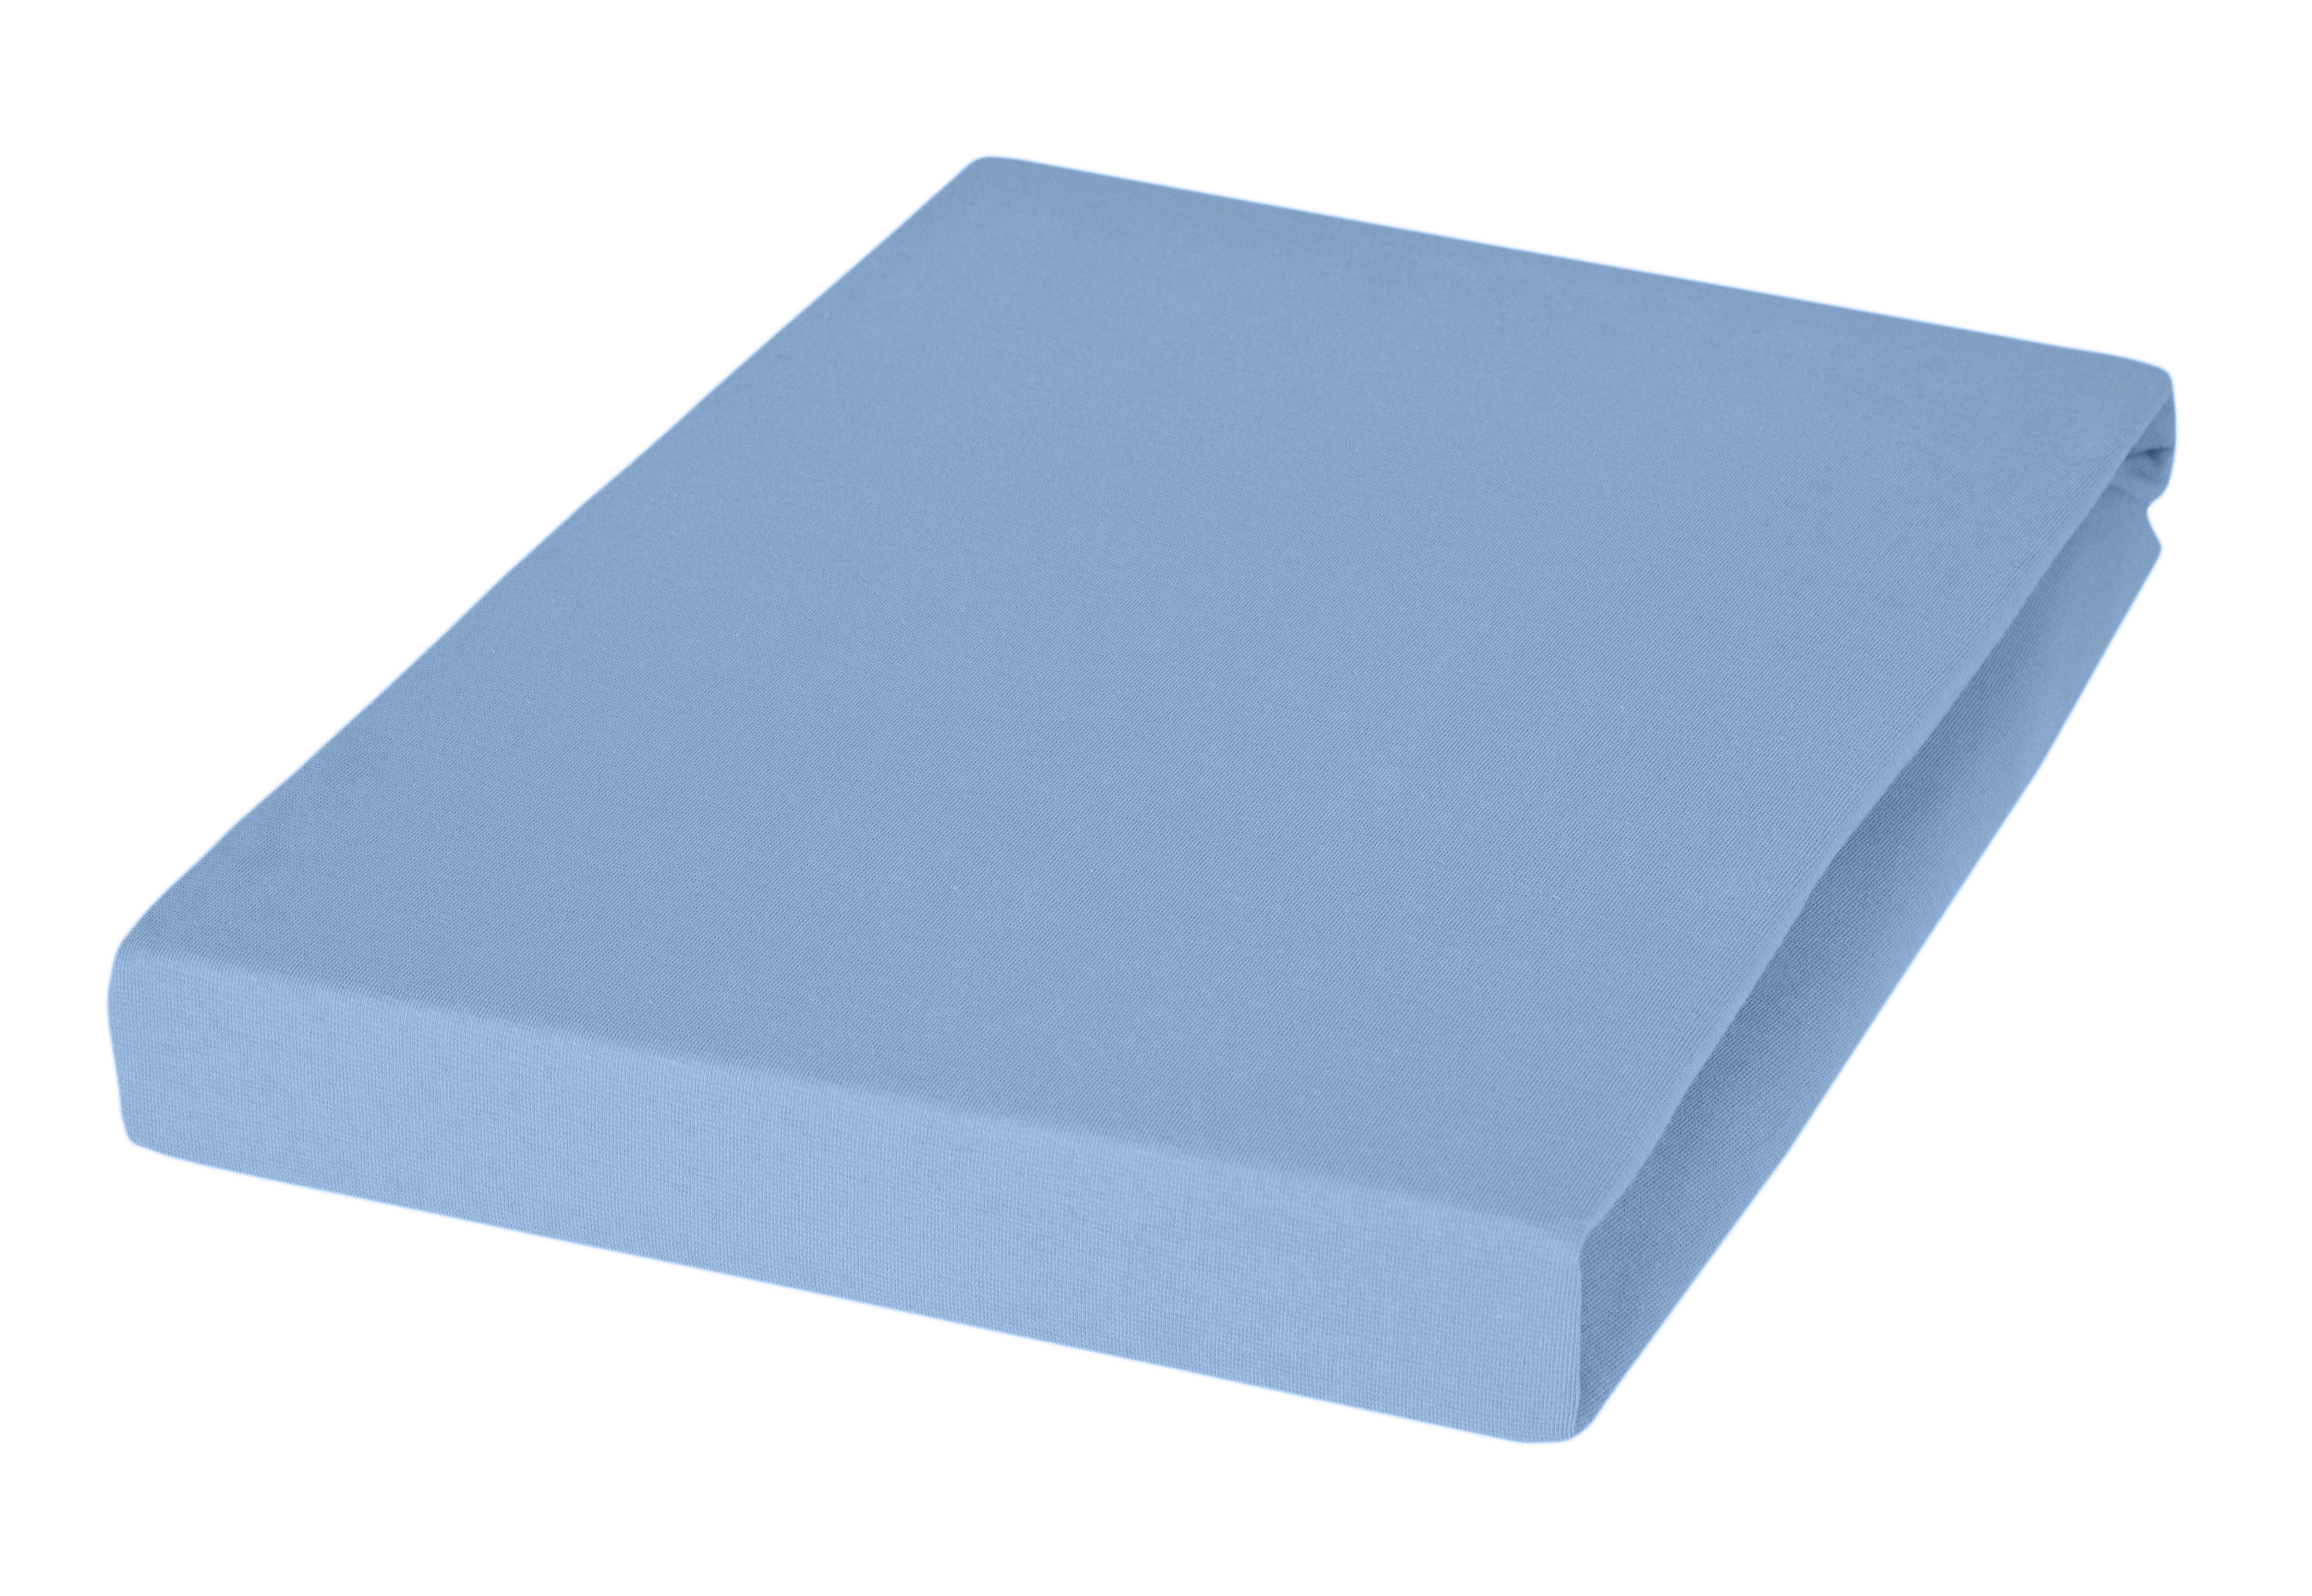 SPANNBETTTUCH Jersey  - Blau, Basics, Textil (100/200cm) - Janine